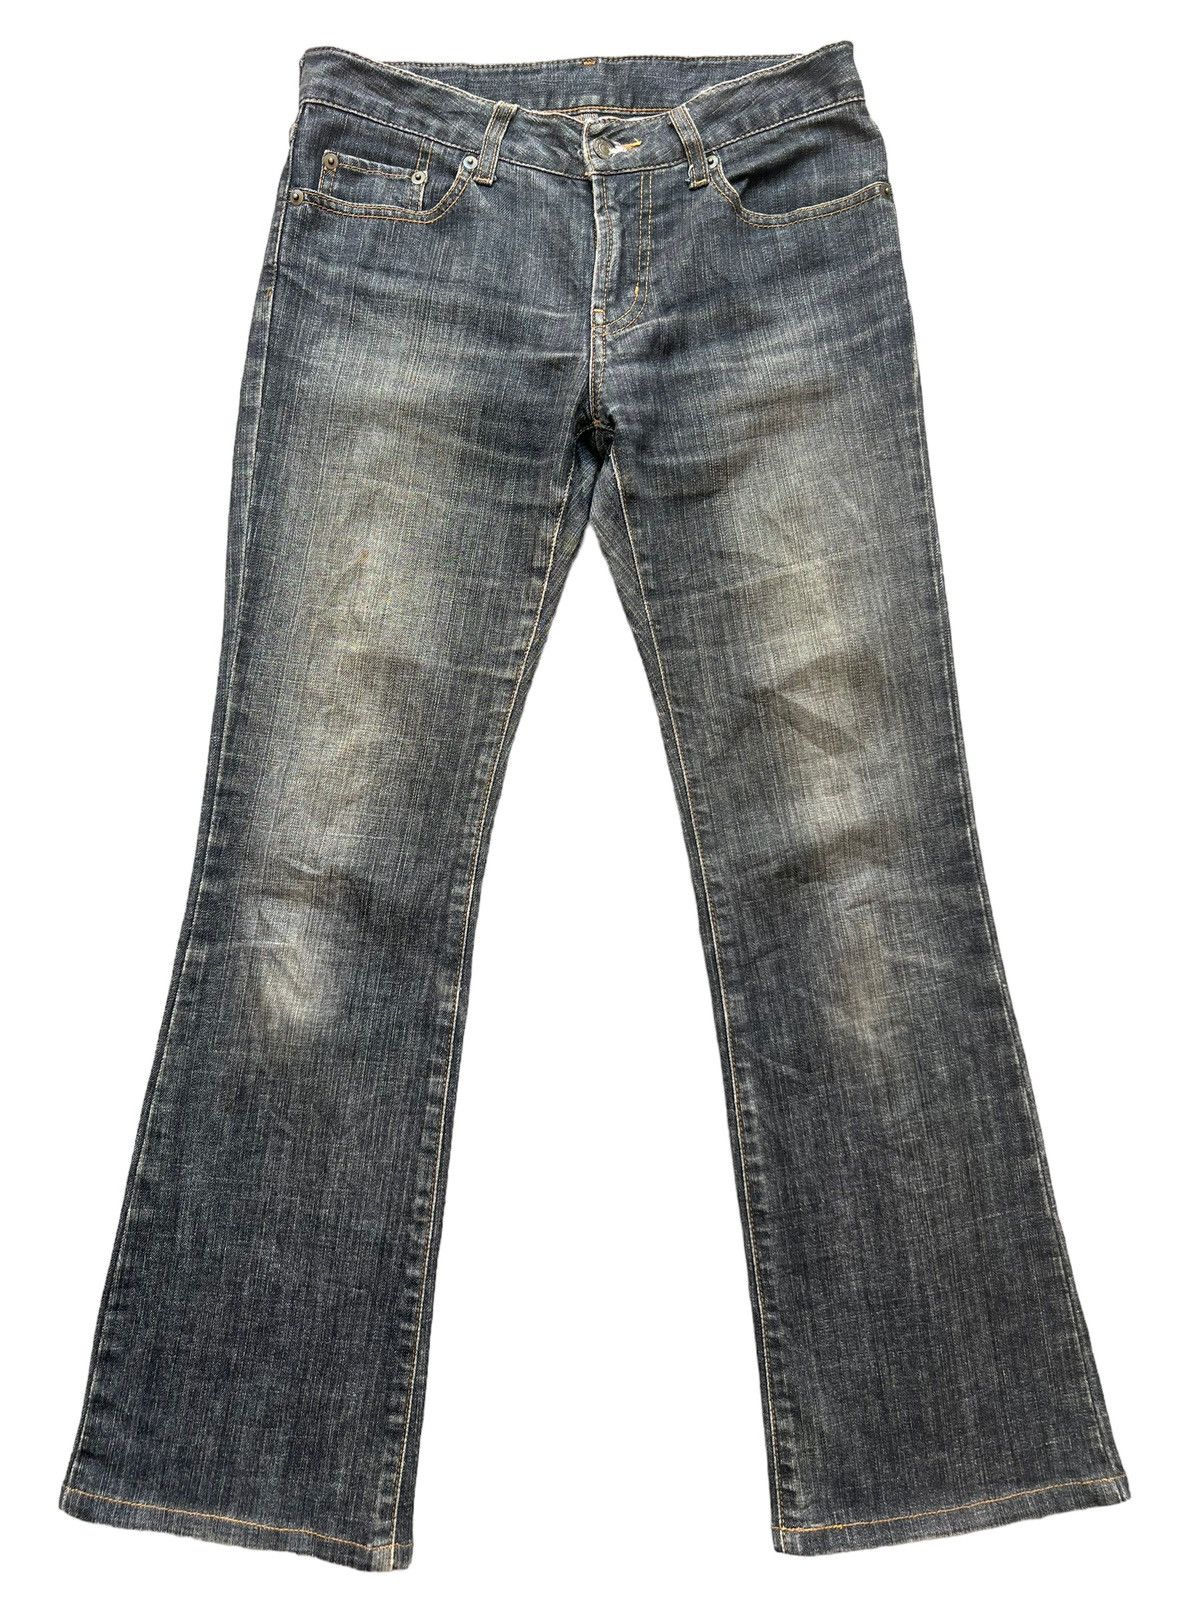 Uniqlo Black Low Rise Bootcut Flare Denim Jeans 30x29 - 2